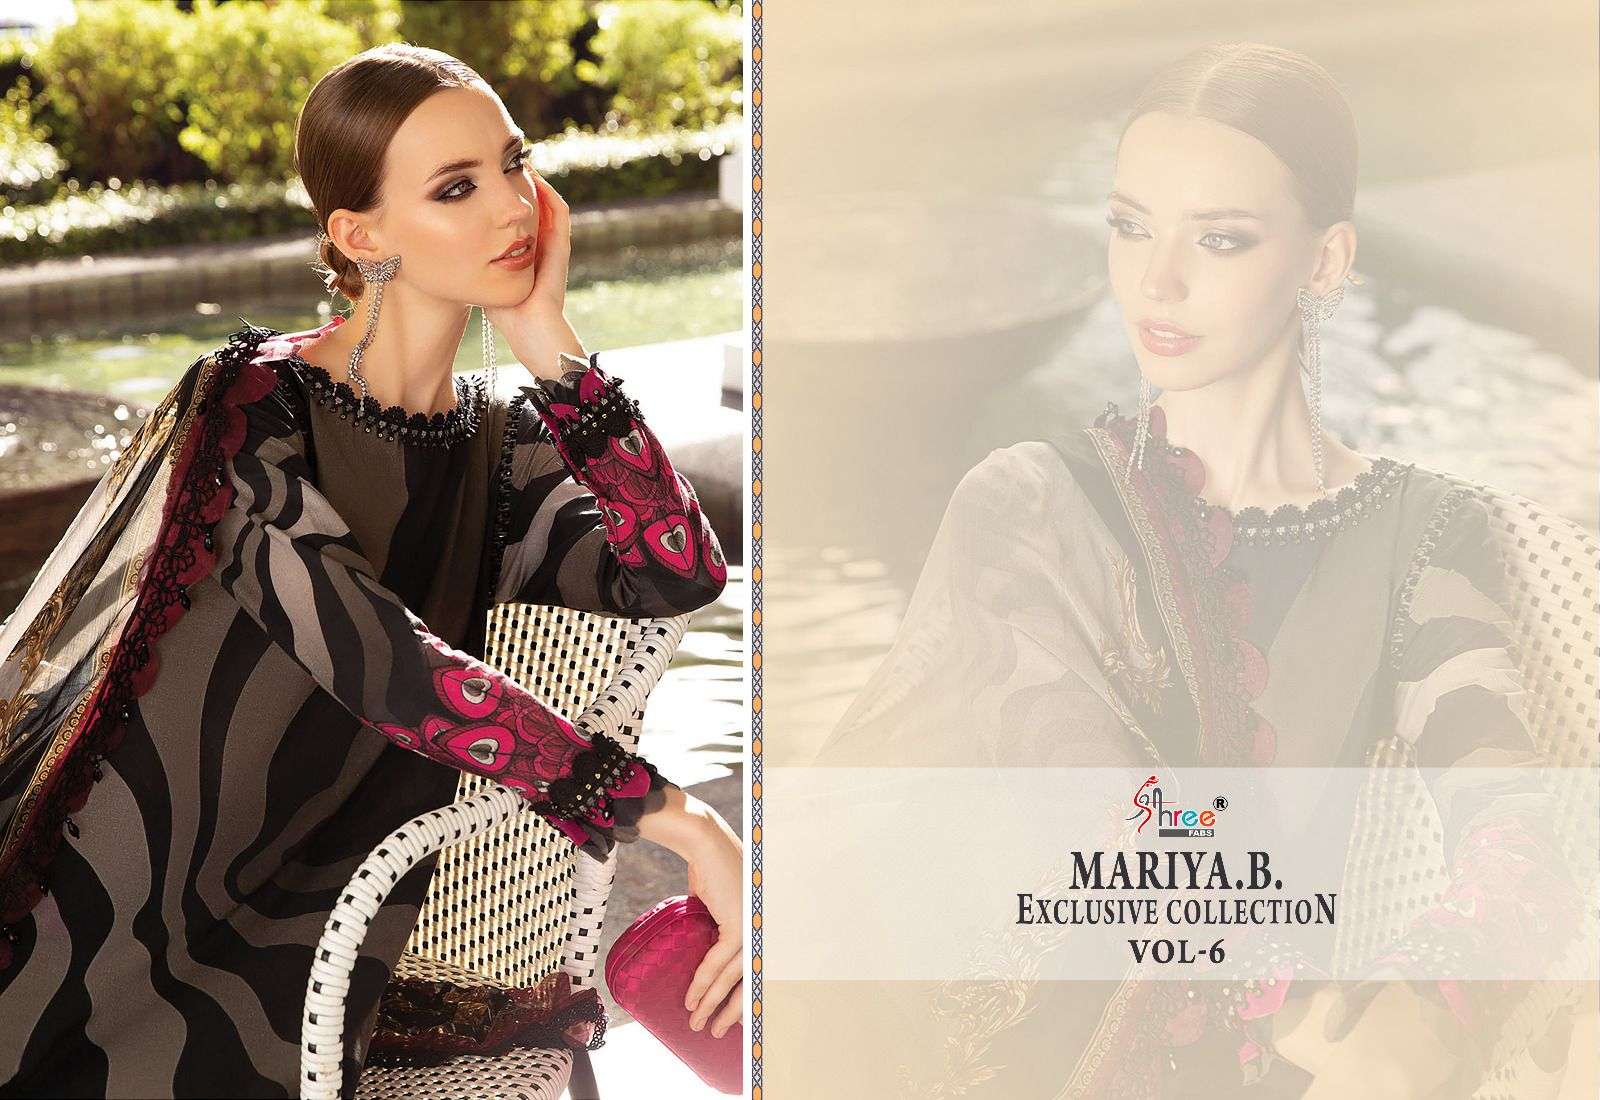 shree fabs maria b exclusive collection vol-6 3298-3305 series designer cotton dupatta wedding wear pakistani suit wholesaler surat gujarat